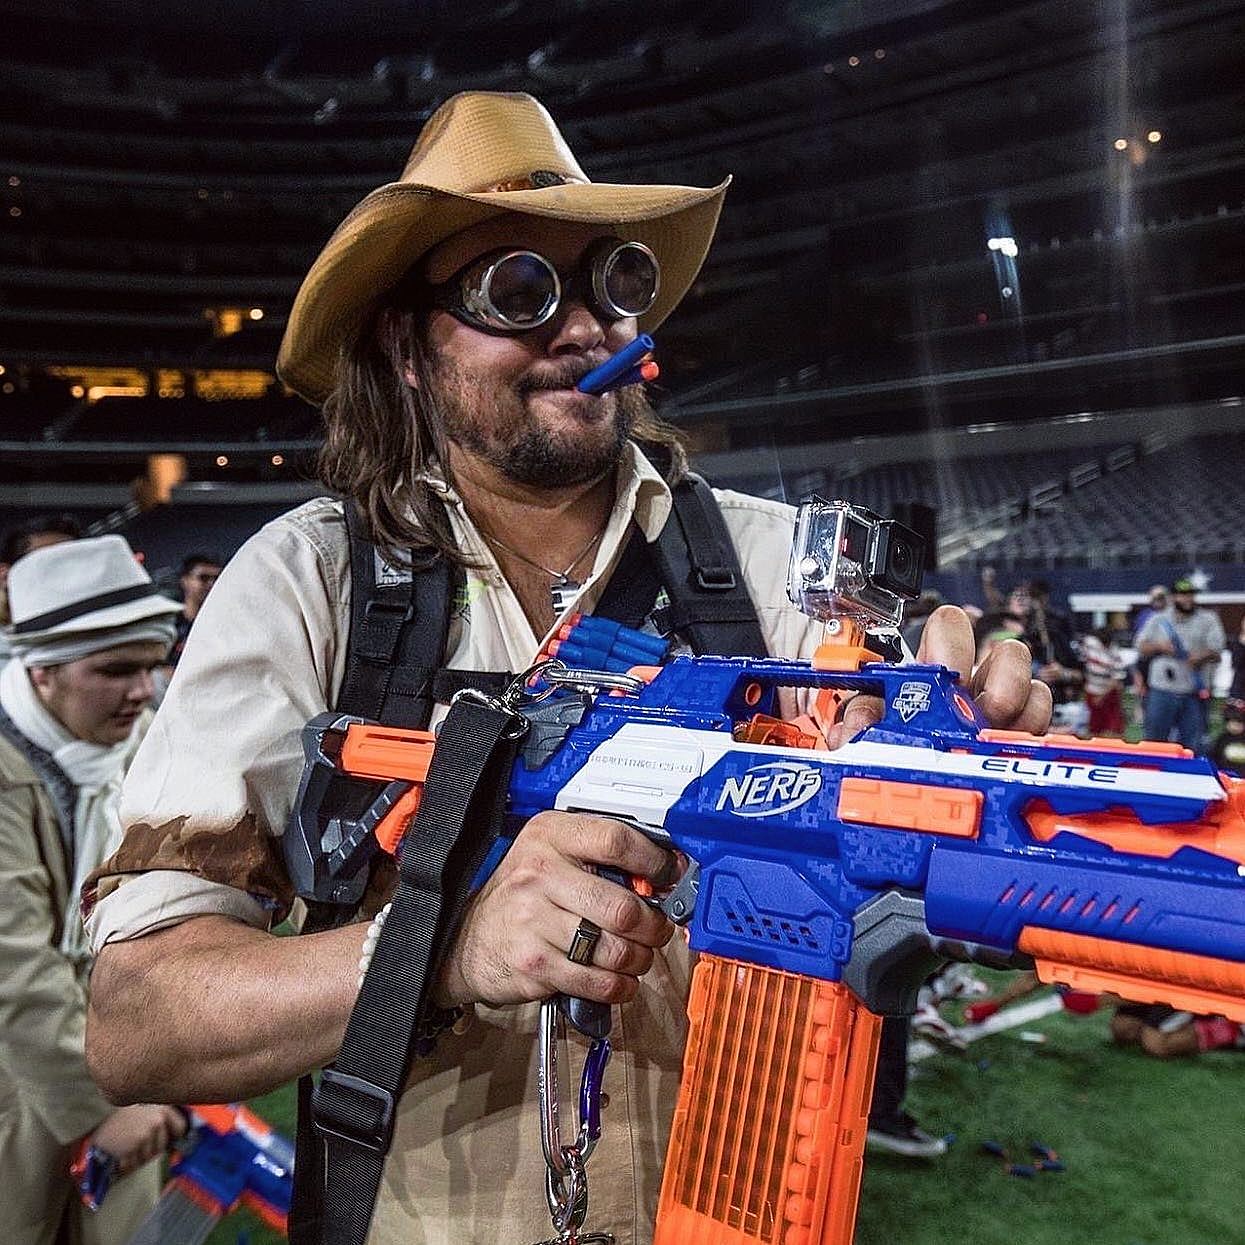 World's Largest Nerf Battle Returns to AT&T Stadium in Arlington